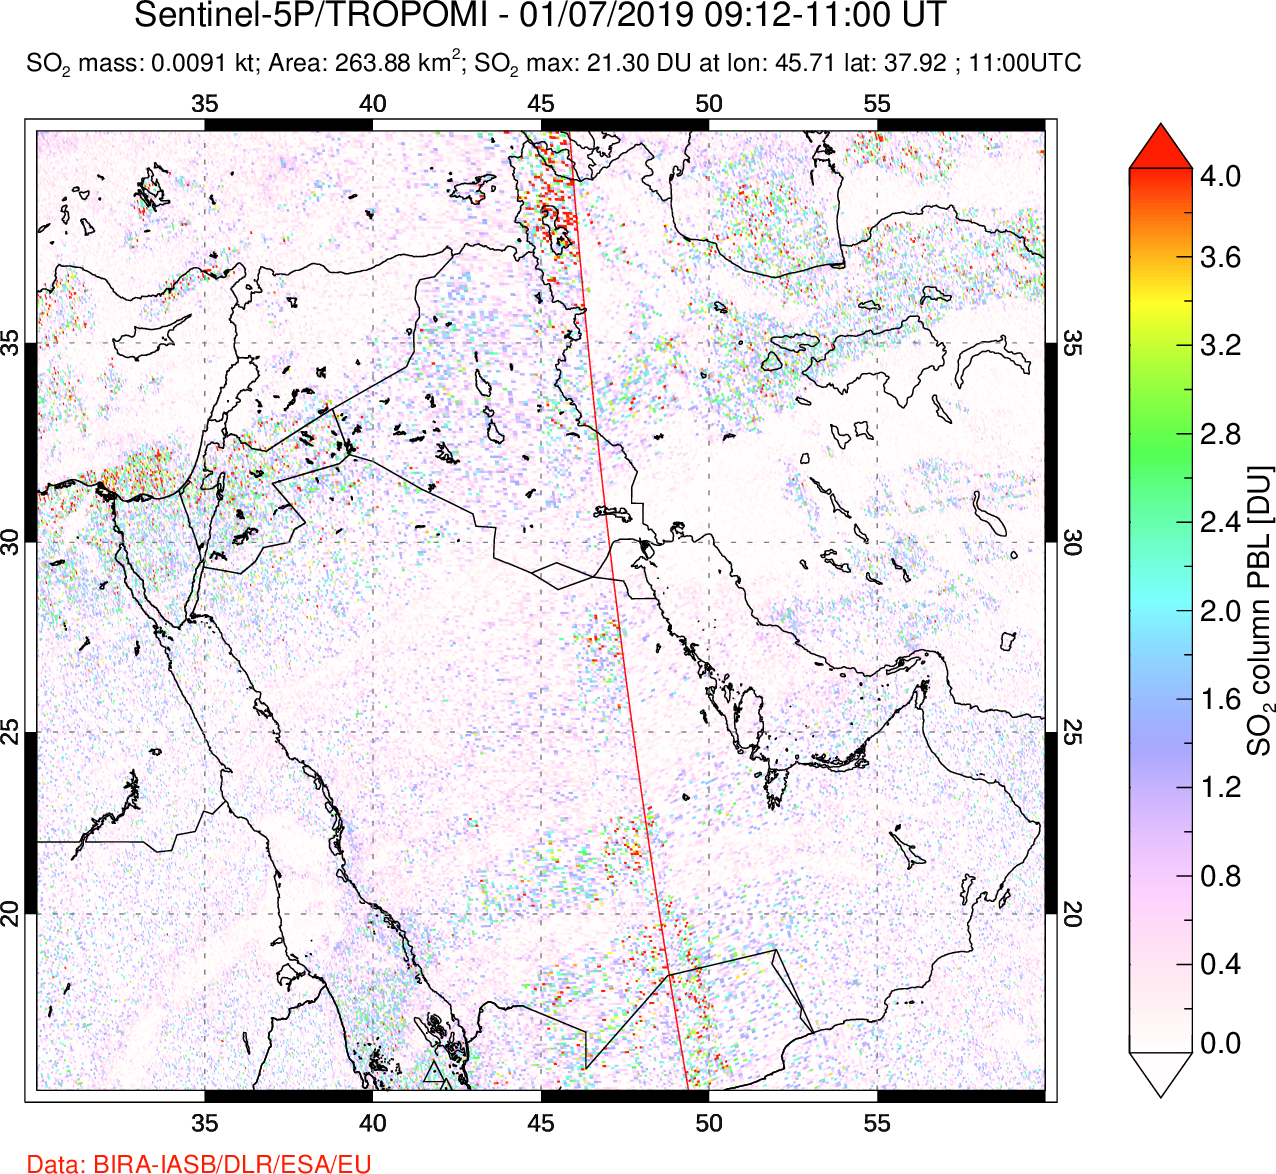 A sulfur dioxide image over Middle East on Jan 07, 2019.